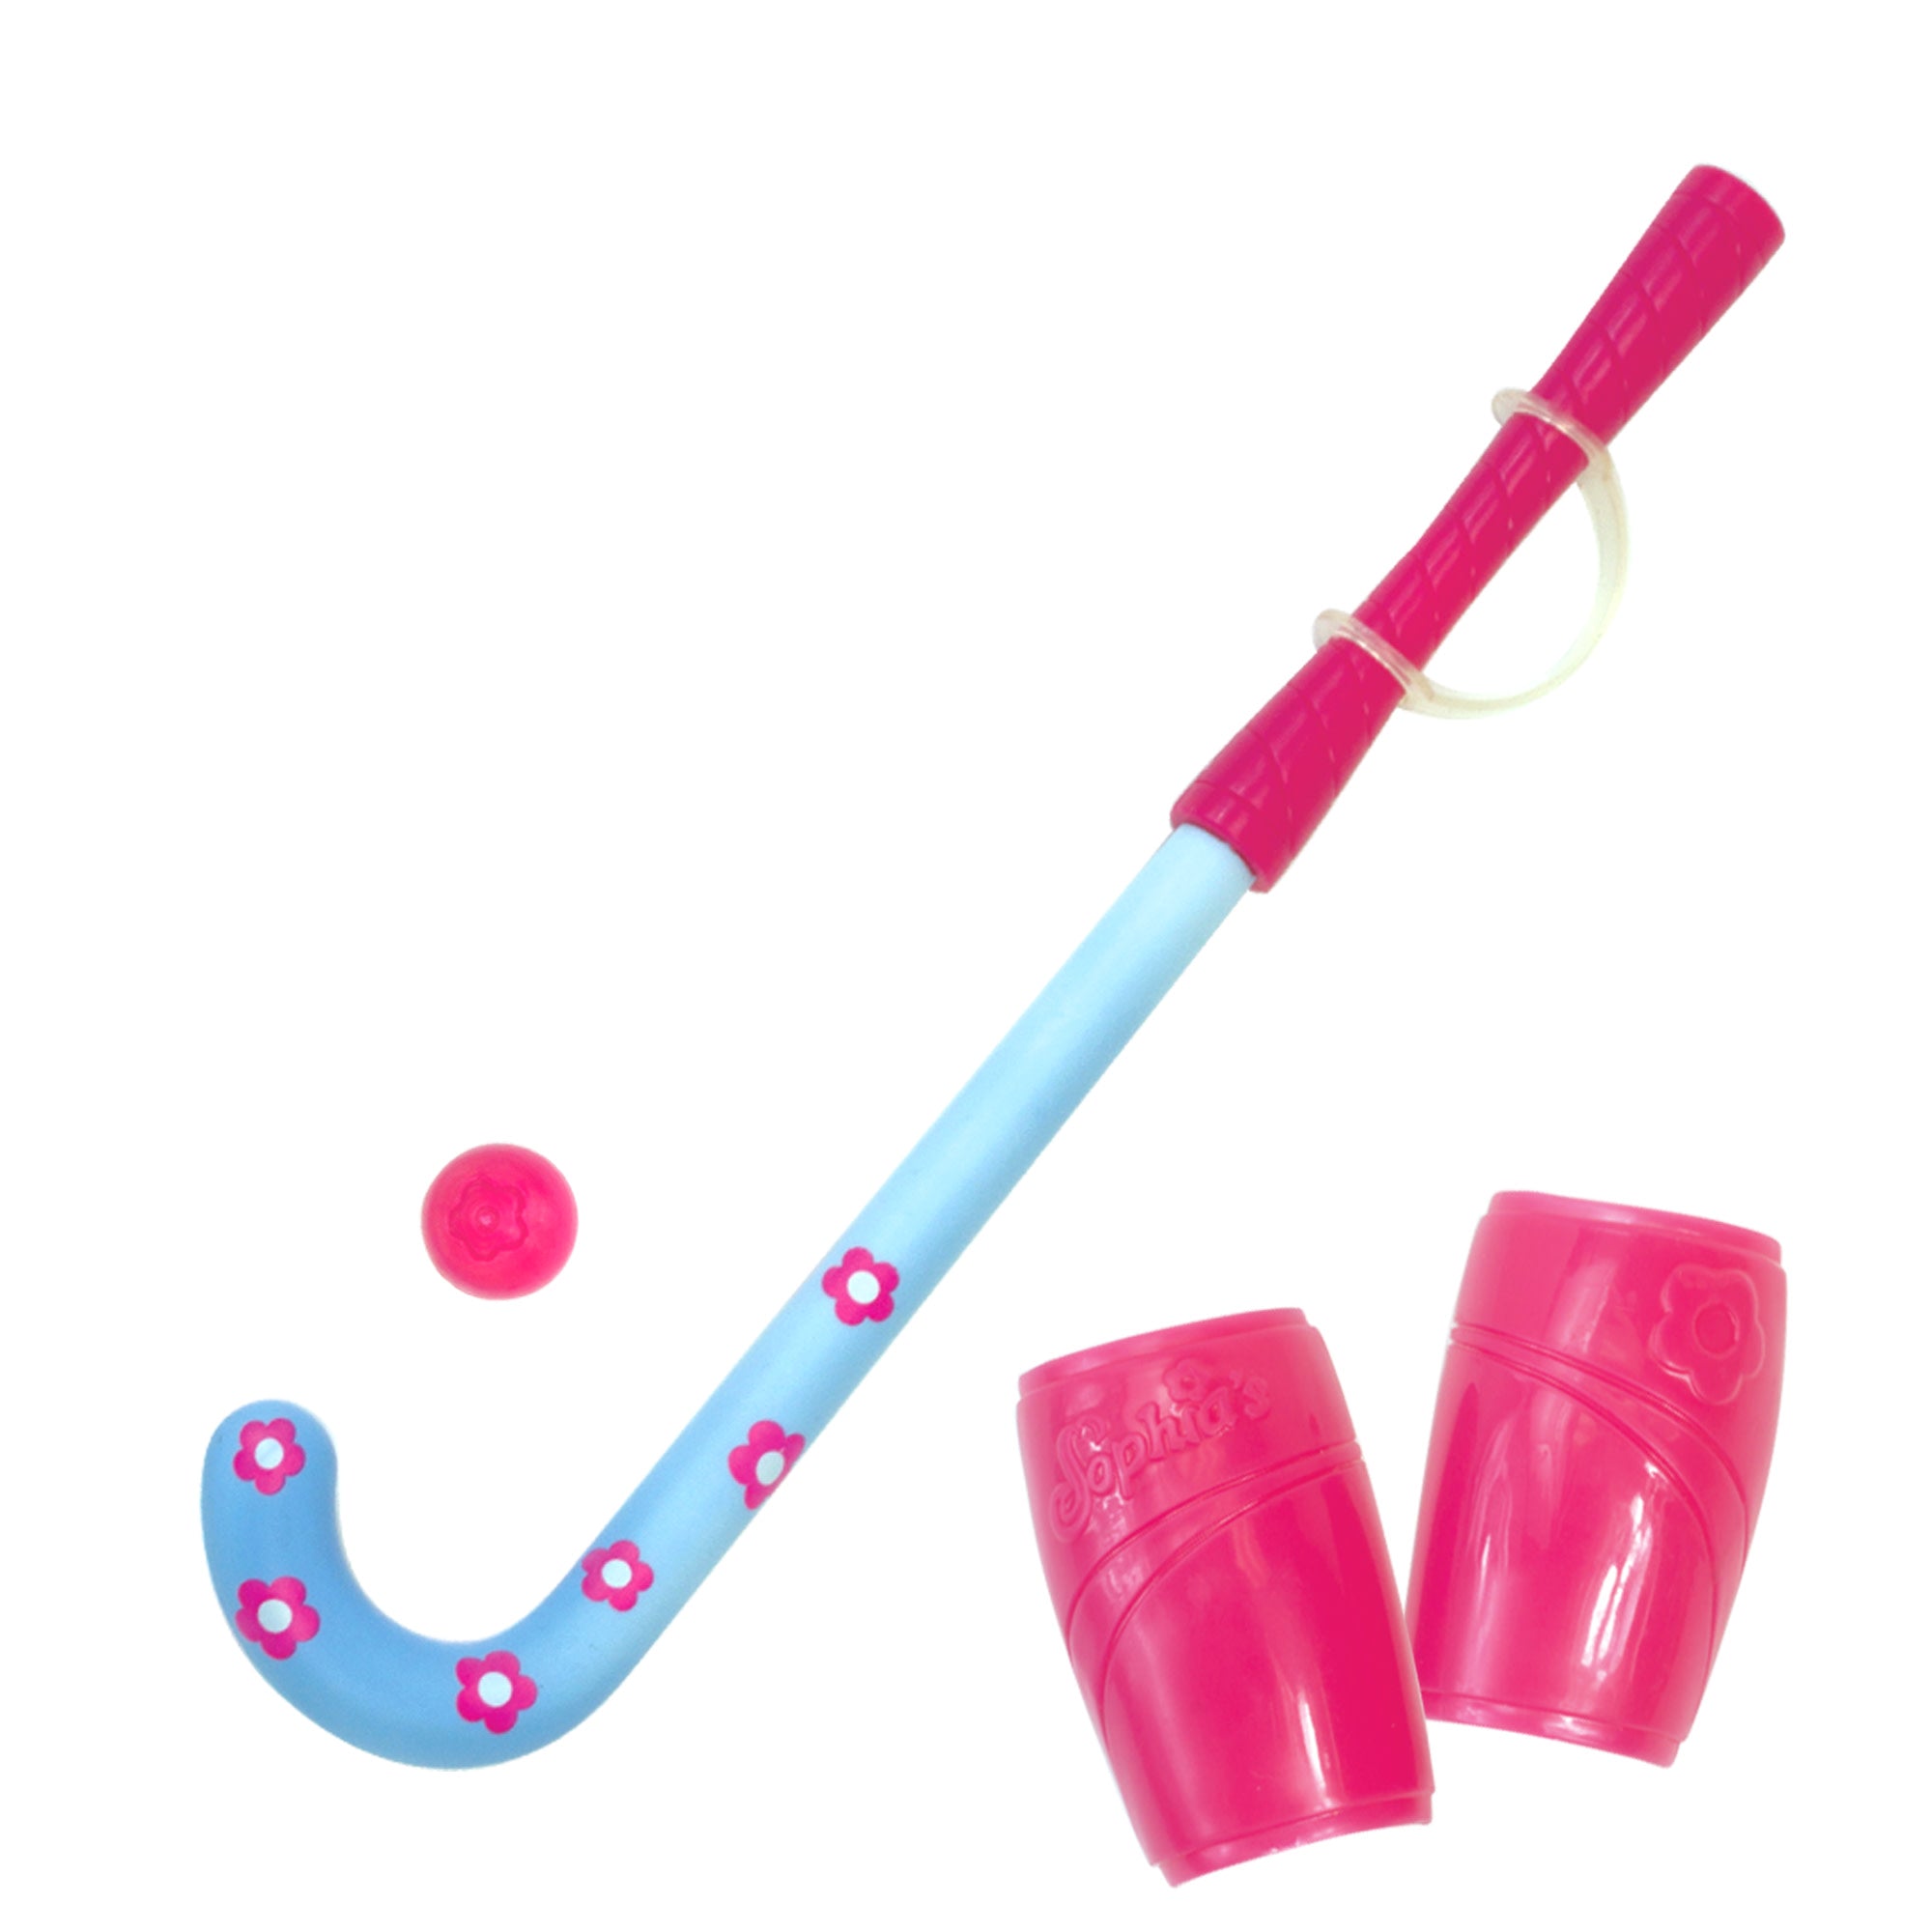 Sophia’s Six-Piece Lacrosse, Field Hockey, & Basketball Sports Equipment Playset for 18” Dolls, Hot Pink